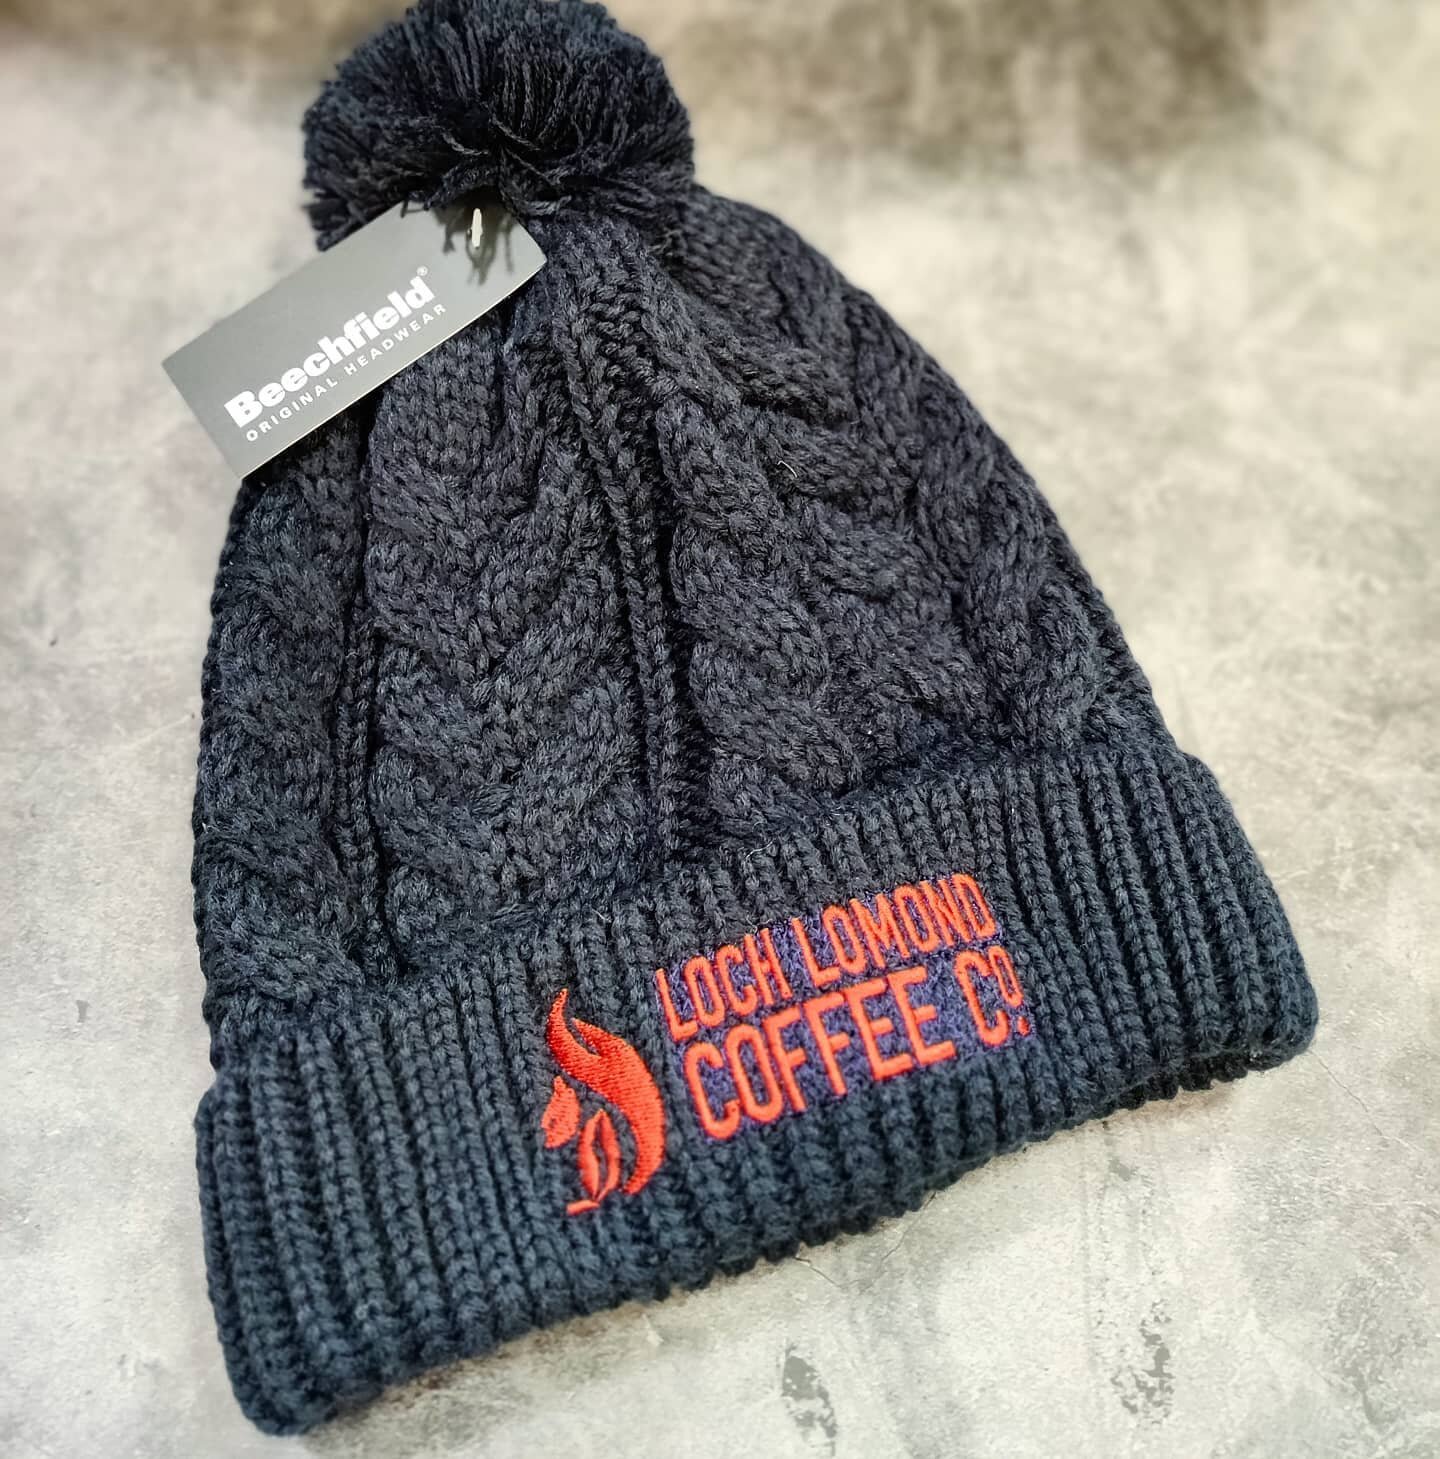 Knitted bobble hats are back in stock! Super cosy and comfy with #lochlomondcoffeeco logo ❤️☕

#lochlomond
#balmaha
#scotland
#glasgowcoffee